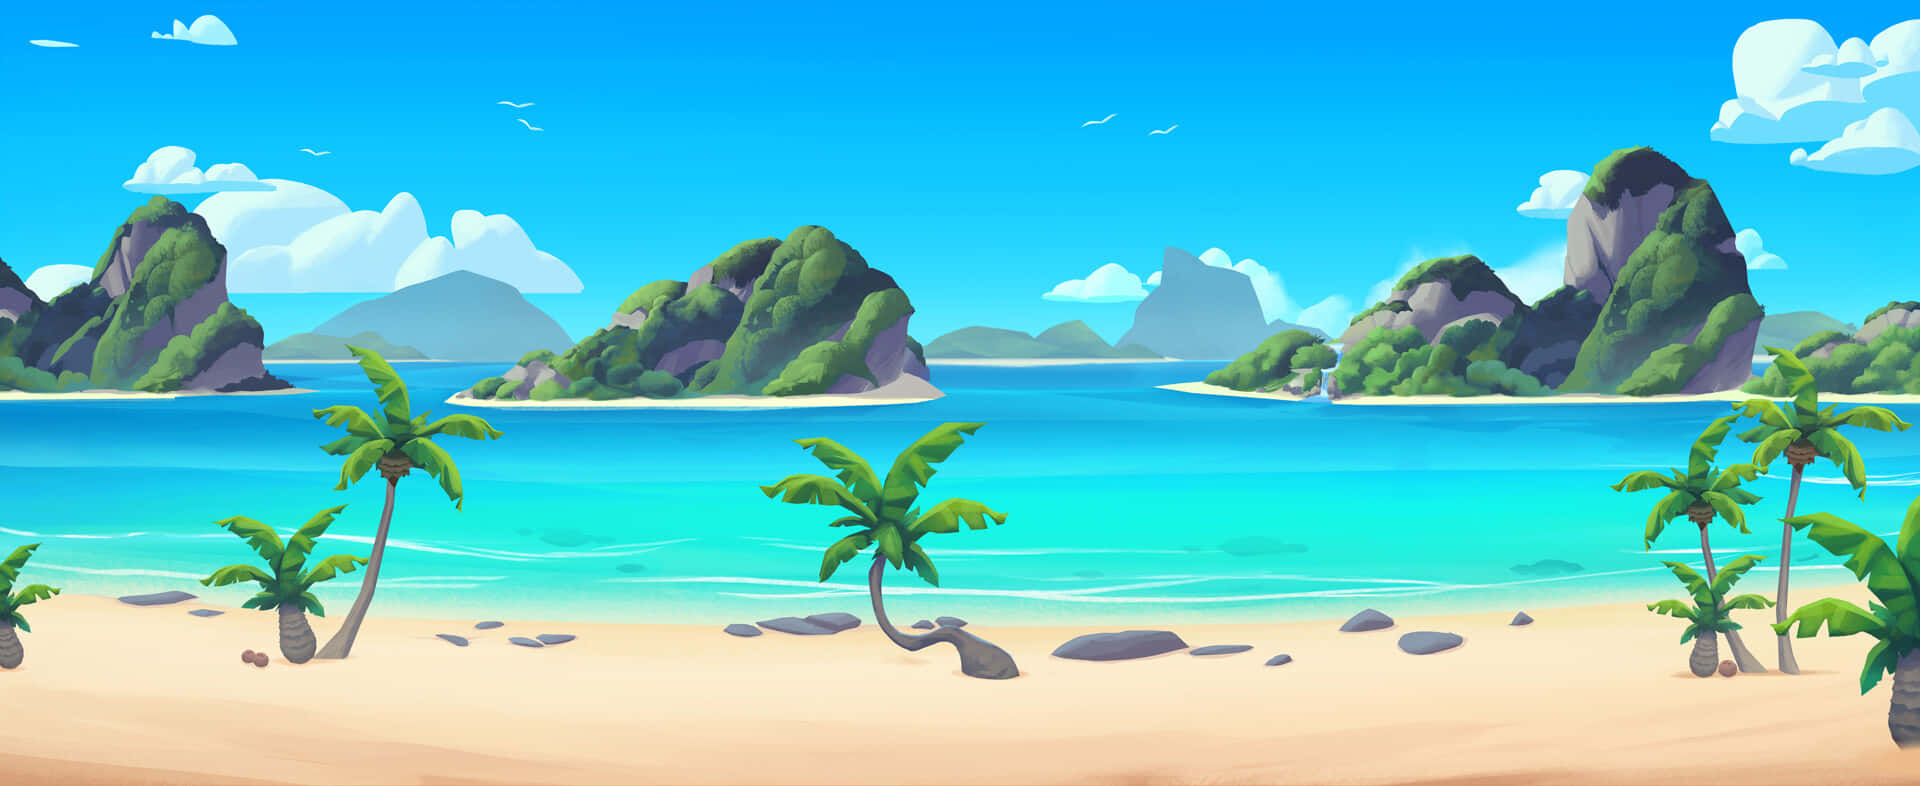 A Cartoon Beach Scene With Palm Trees And A Blue Ocean